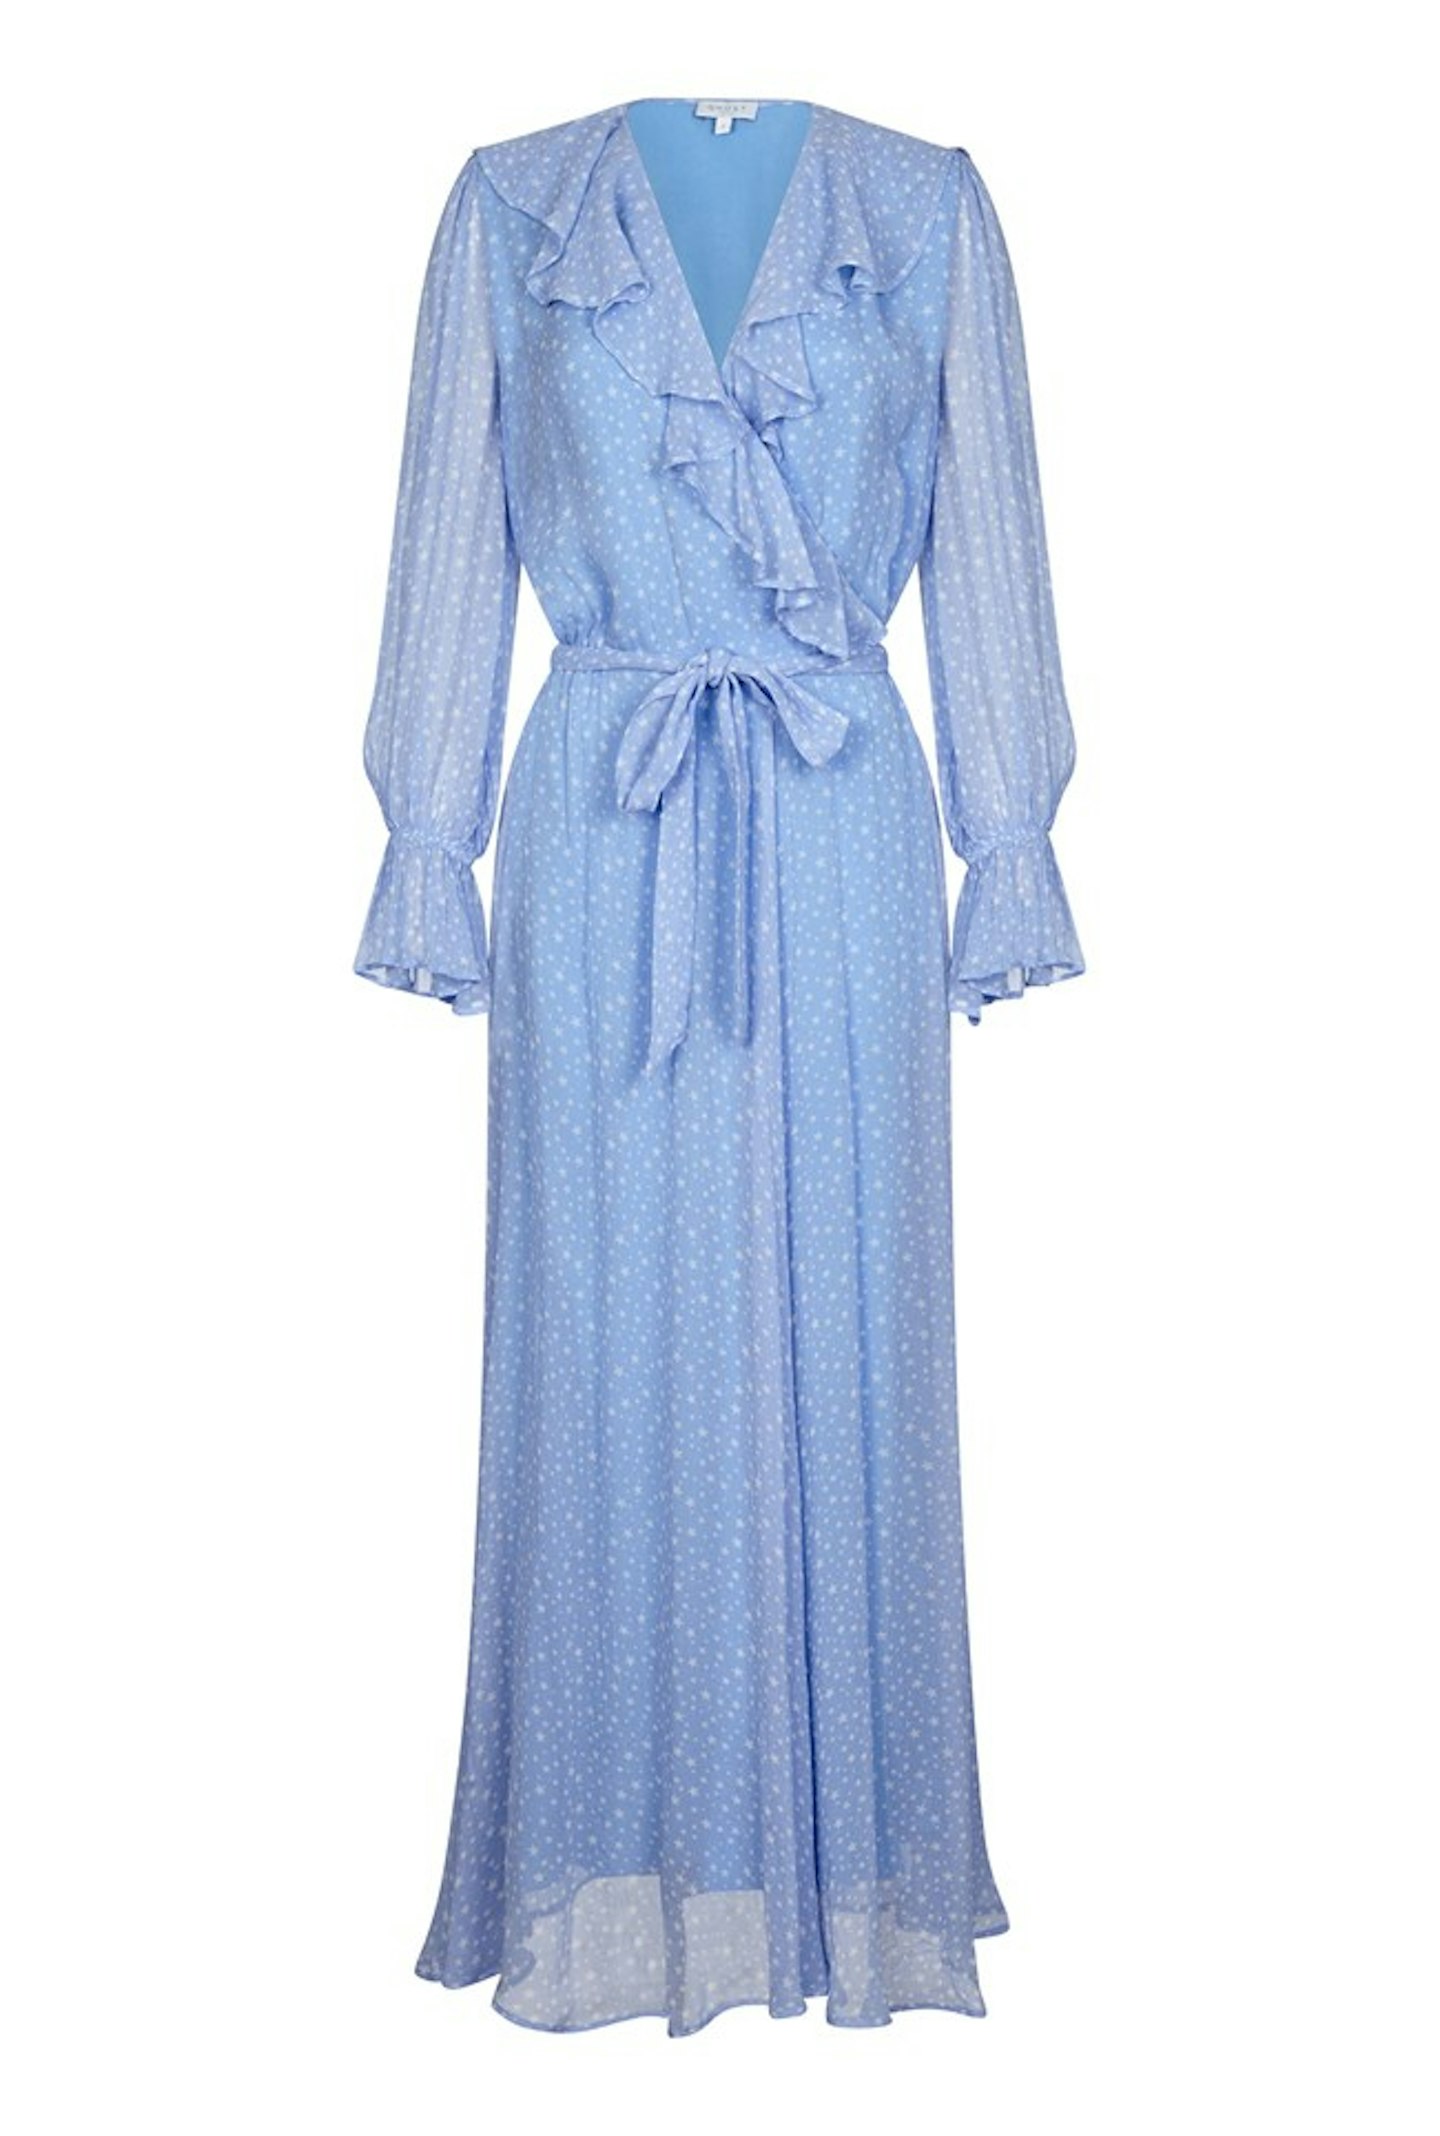 Ghost, Su Dress, £165